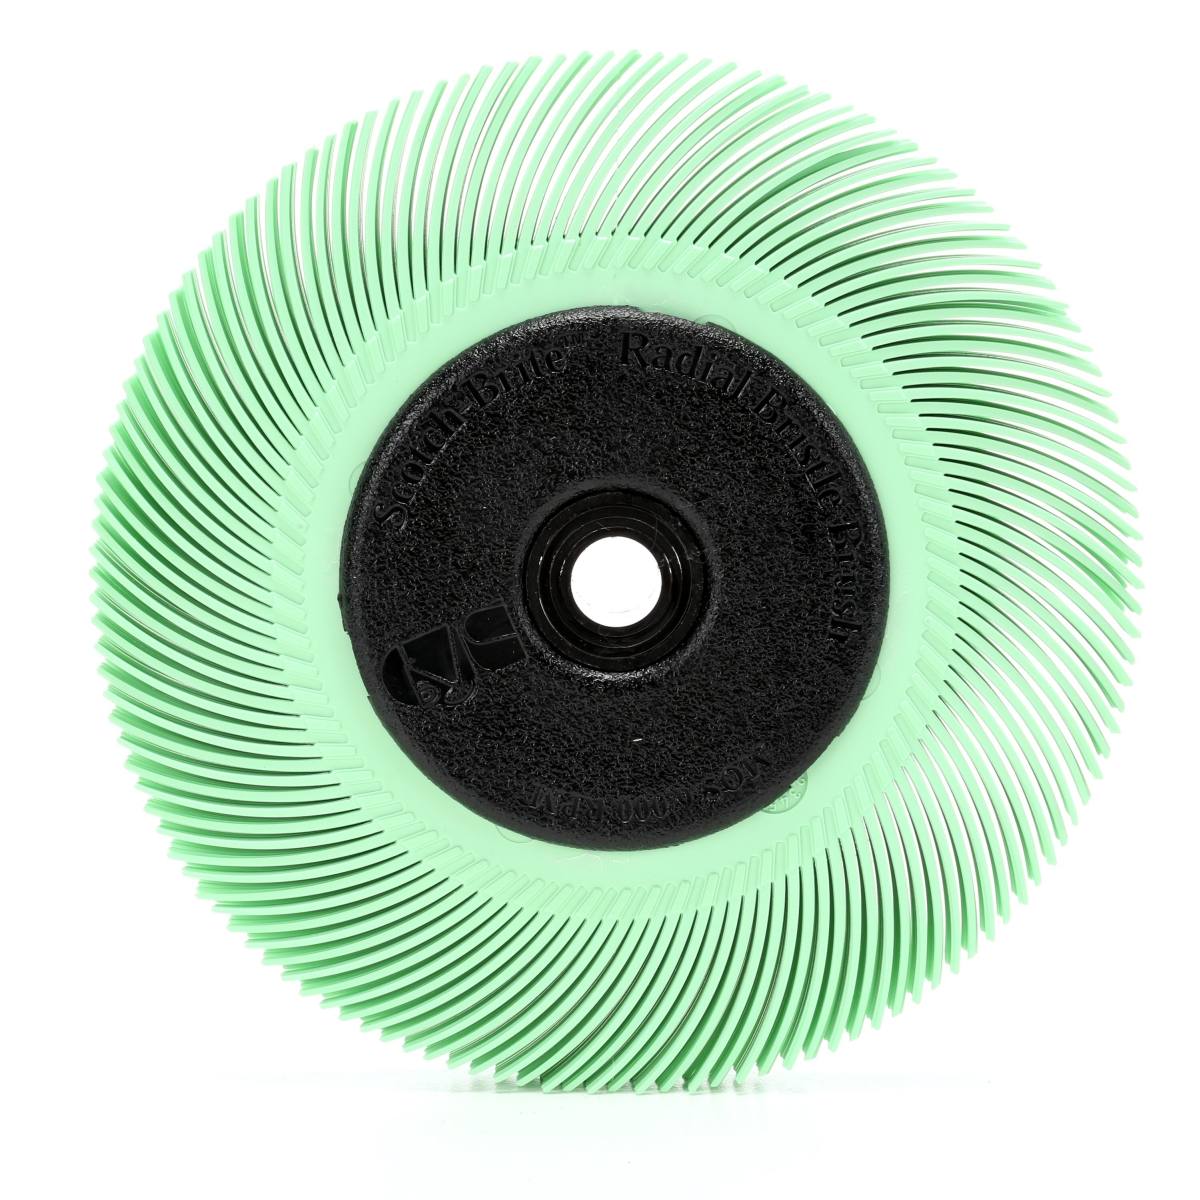 3M Scotch-Brite Radial Bristle Disc BB-ZB avec bride, vert, 152,4 mm, 1 micron, type C #33217 (60200)